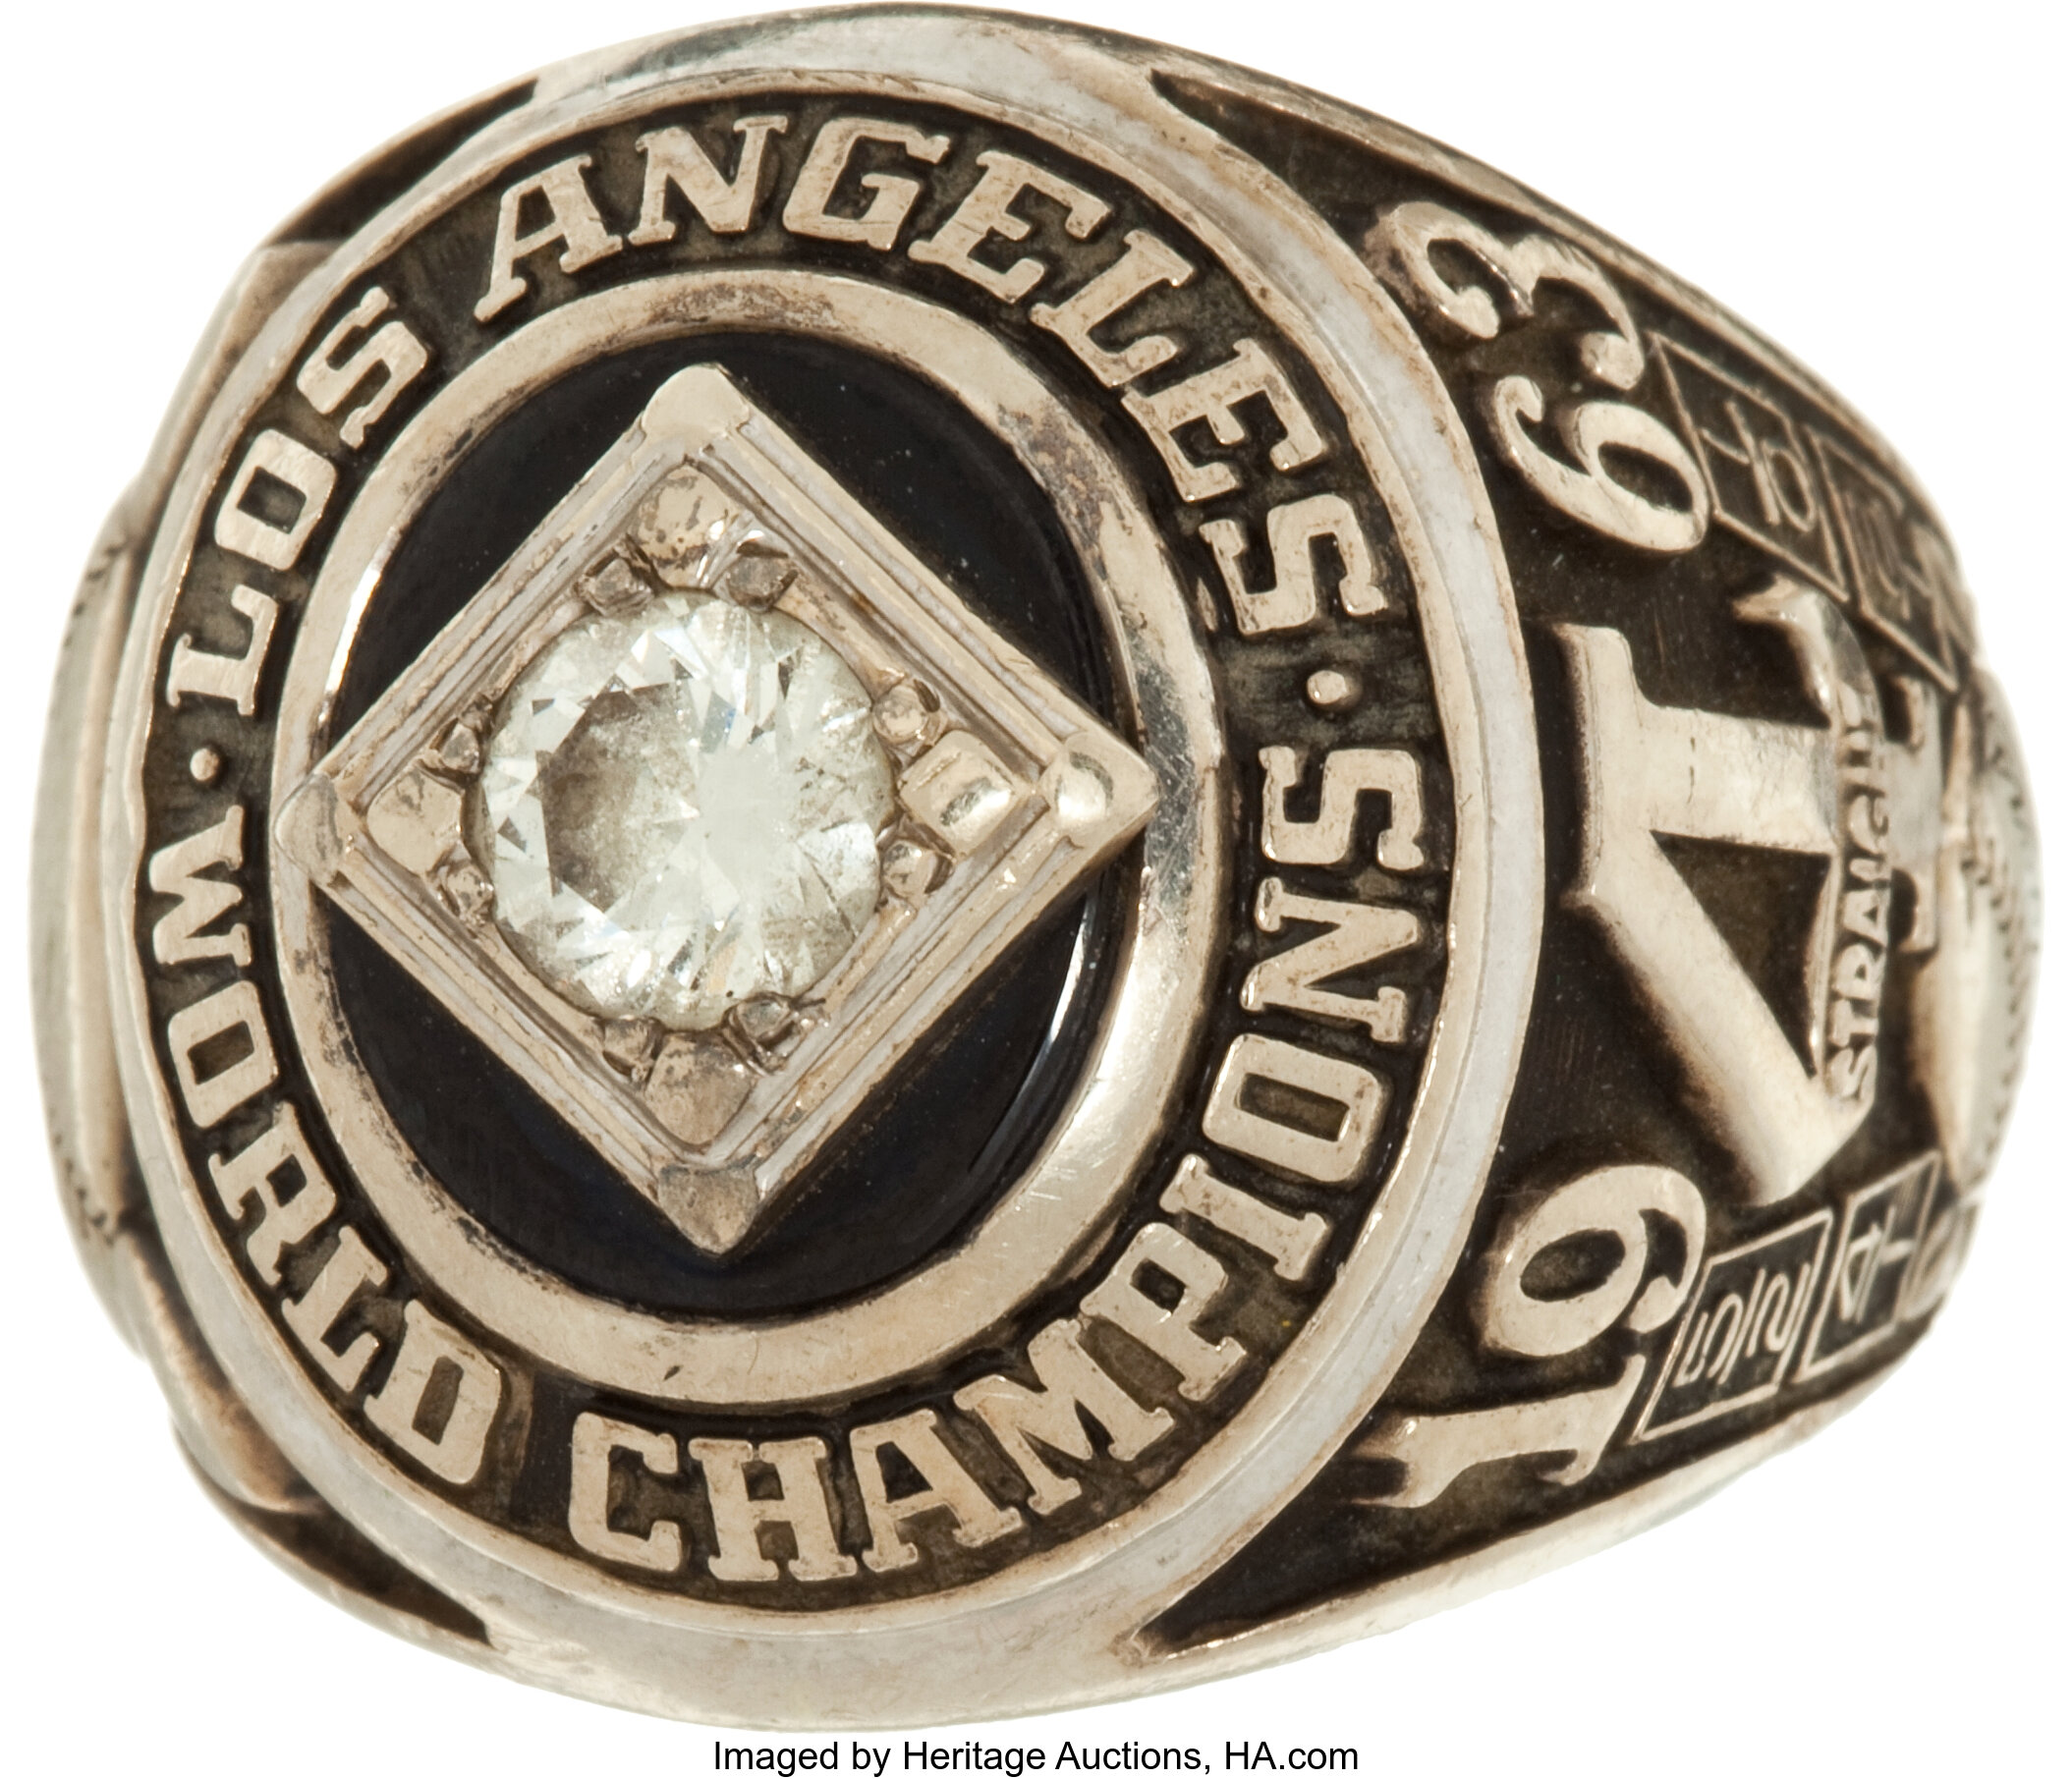 1963 Los Angeles Dodgers MLB World Series Championship Patch